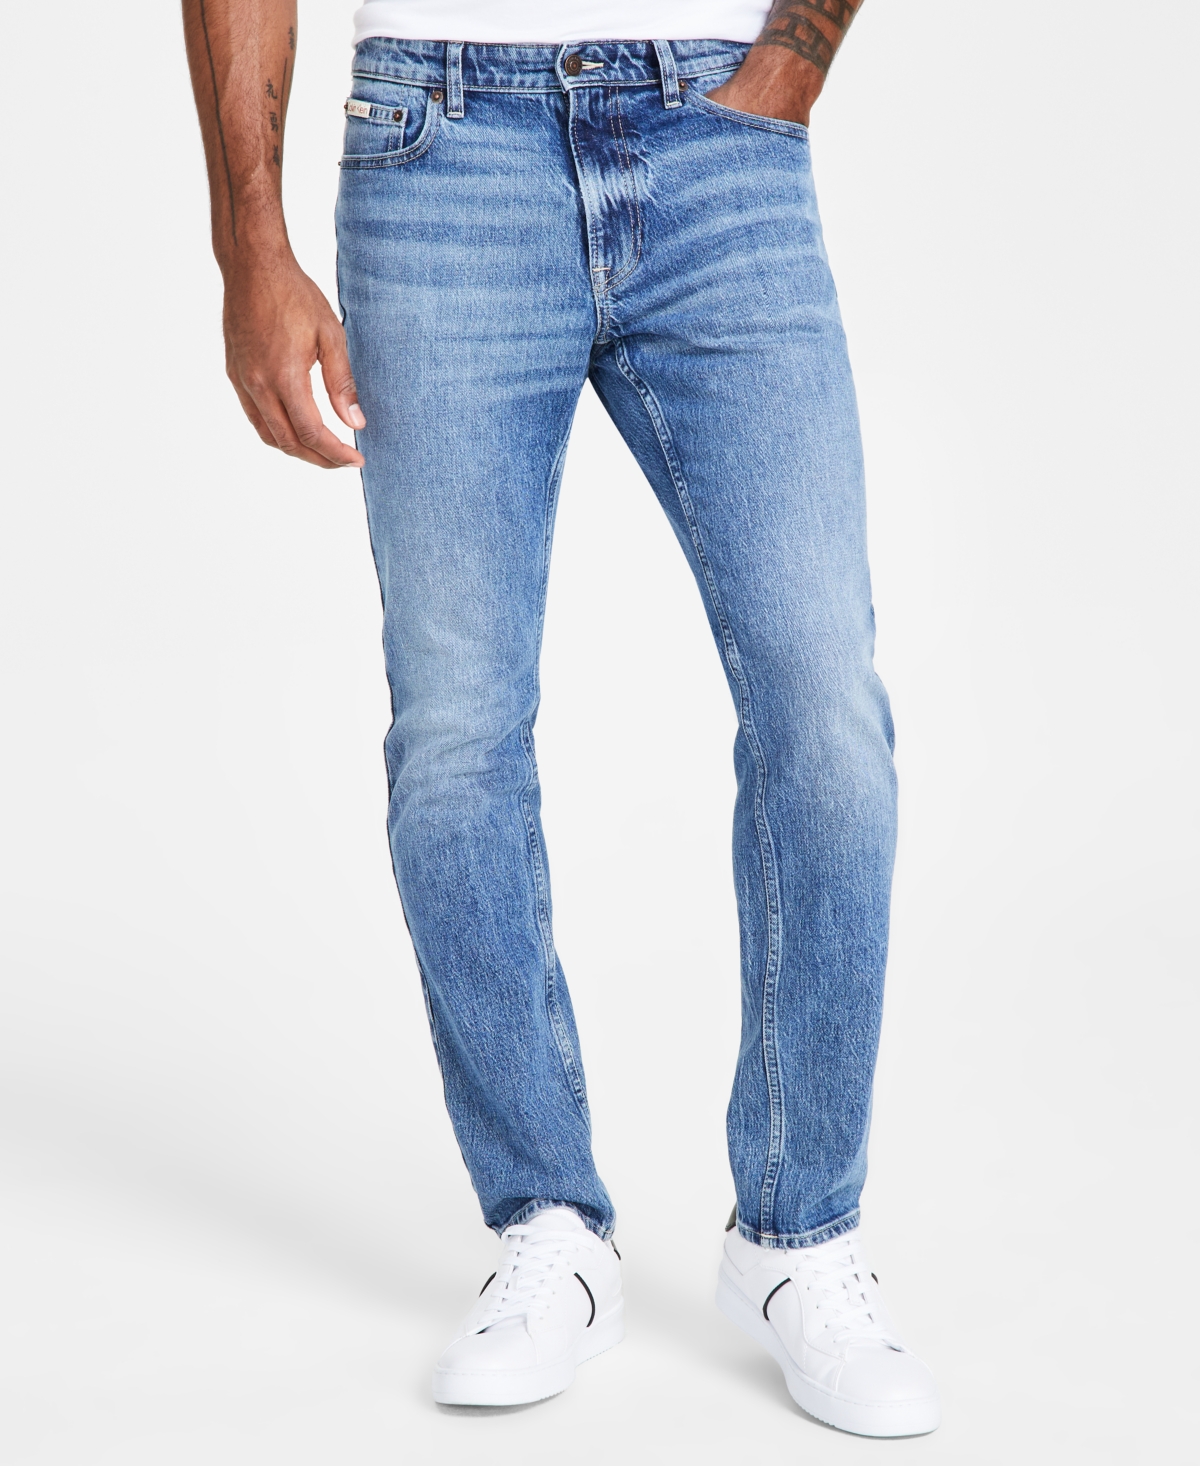 Men's Slim Fit Stretch Jeans - Ck Blue Rinse